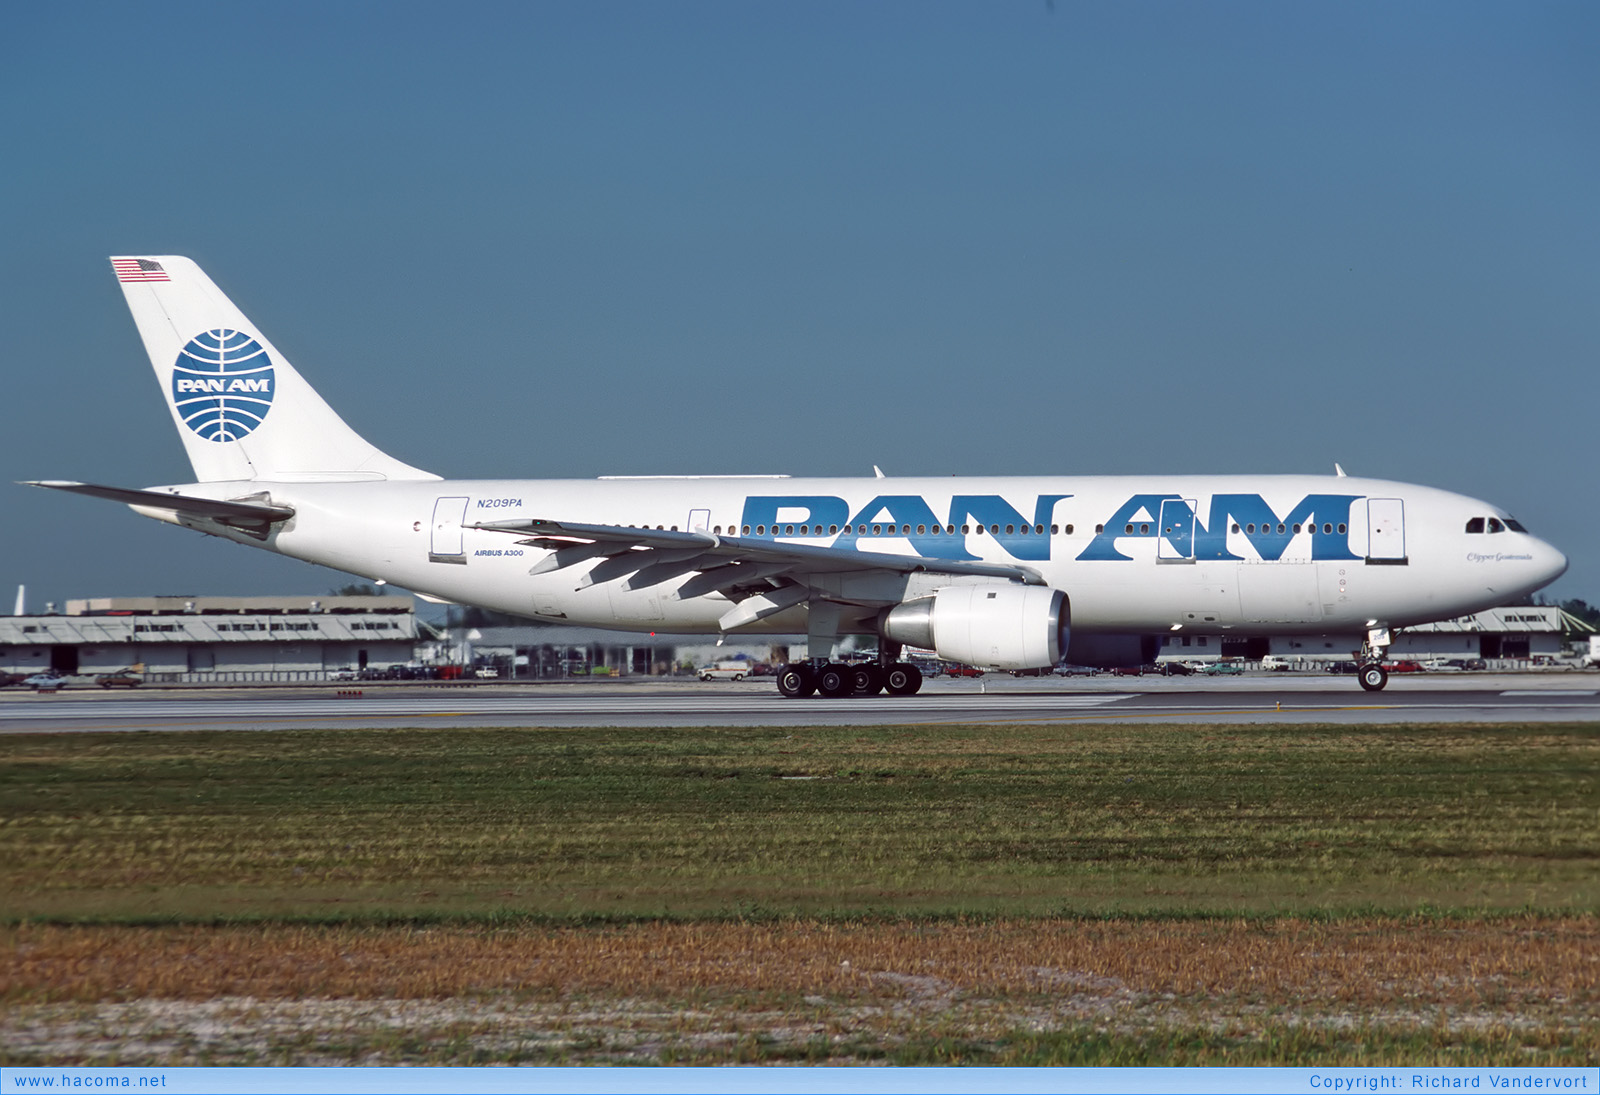 Photo of N209PA - Pan Am Clipper Boston / Guatemala - Miami International Airport - Nov 1988